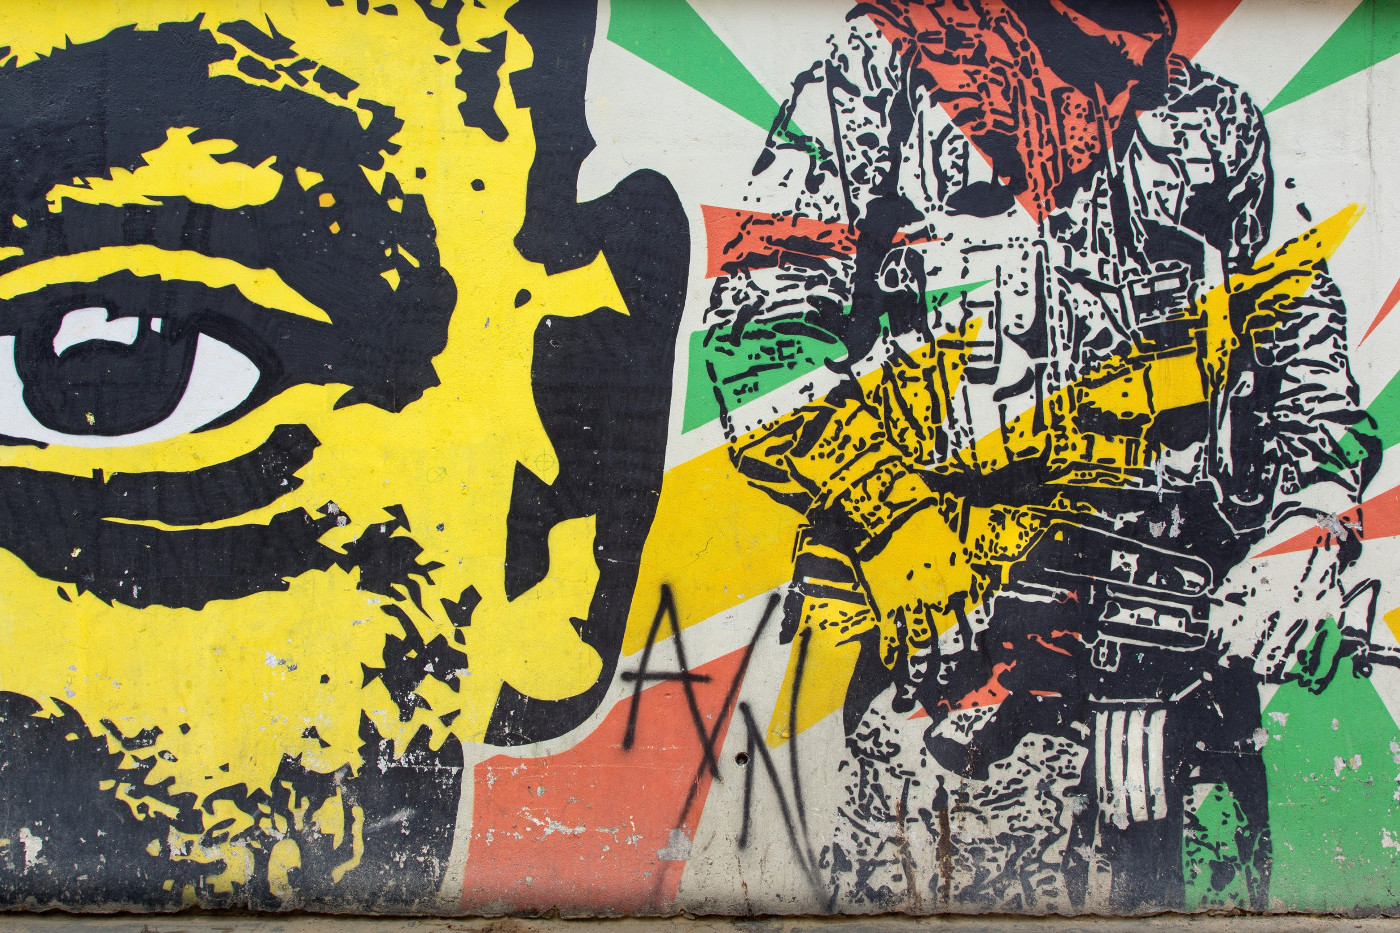 Wandmalerei gegen Gewalt in Kolumbiens Hauptstadt Bogotá. Foto (Symbolbild): Adveniat/Jürgen Escher